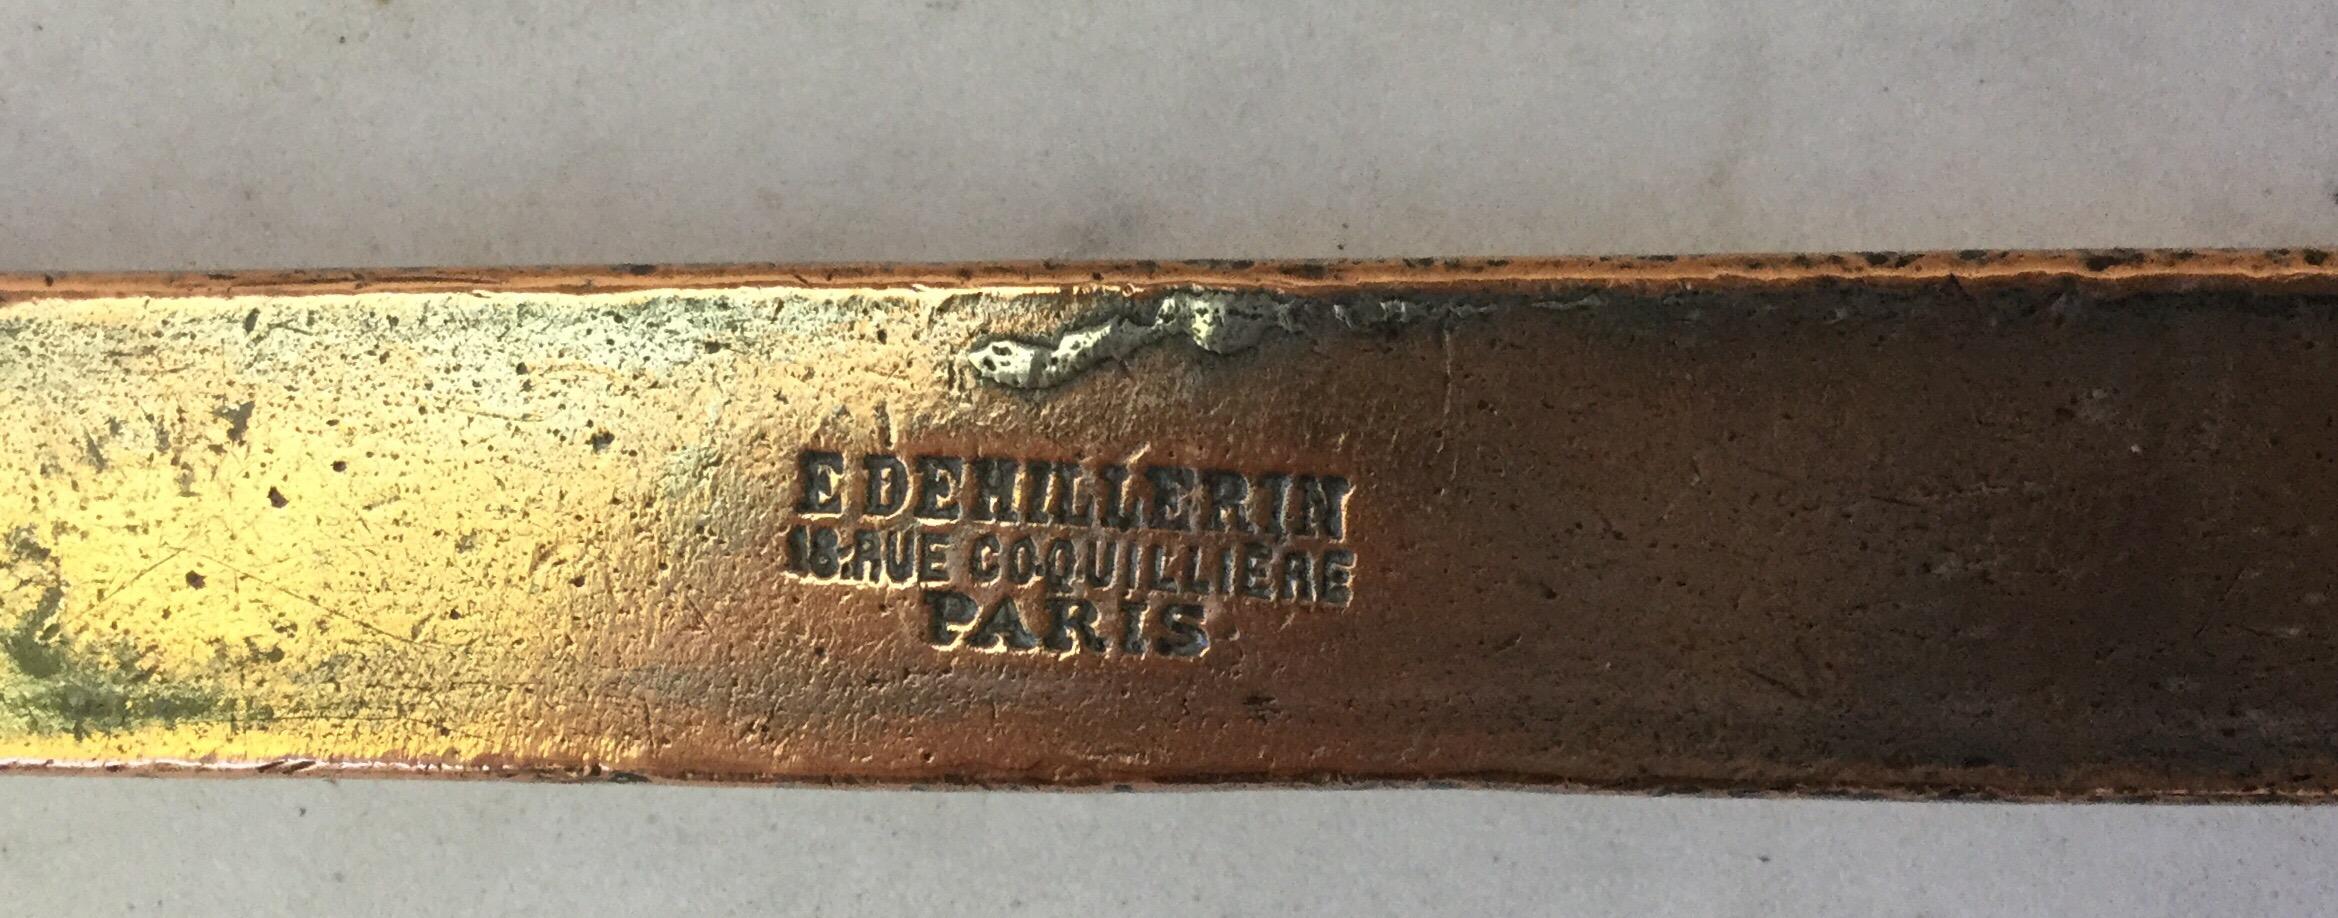 European 19th Century French Copper Ladle Dehillerin Paris For Sale